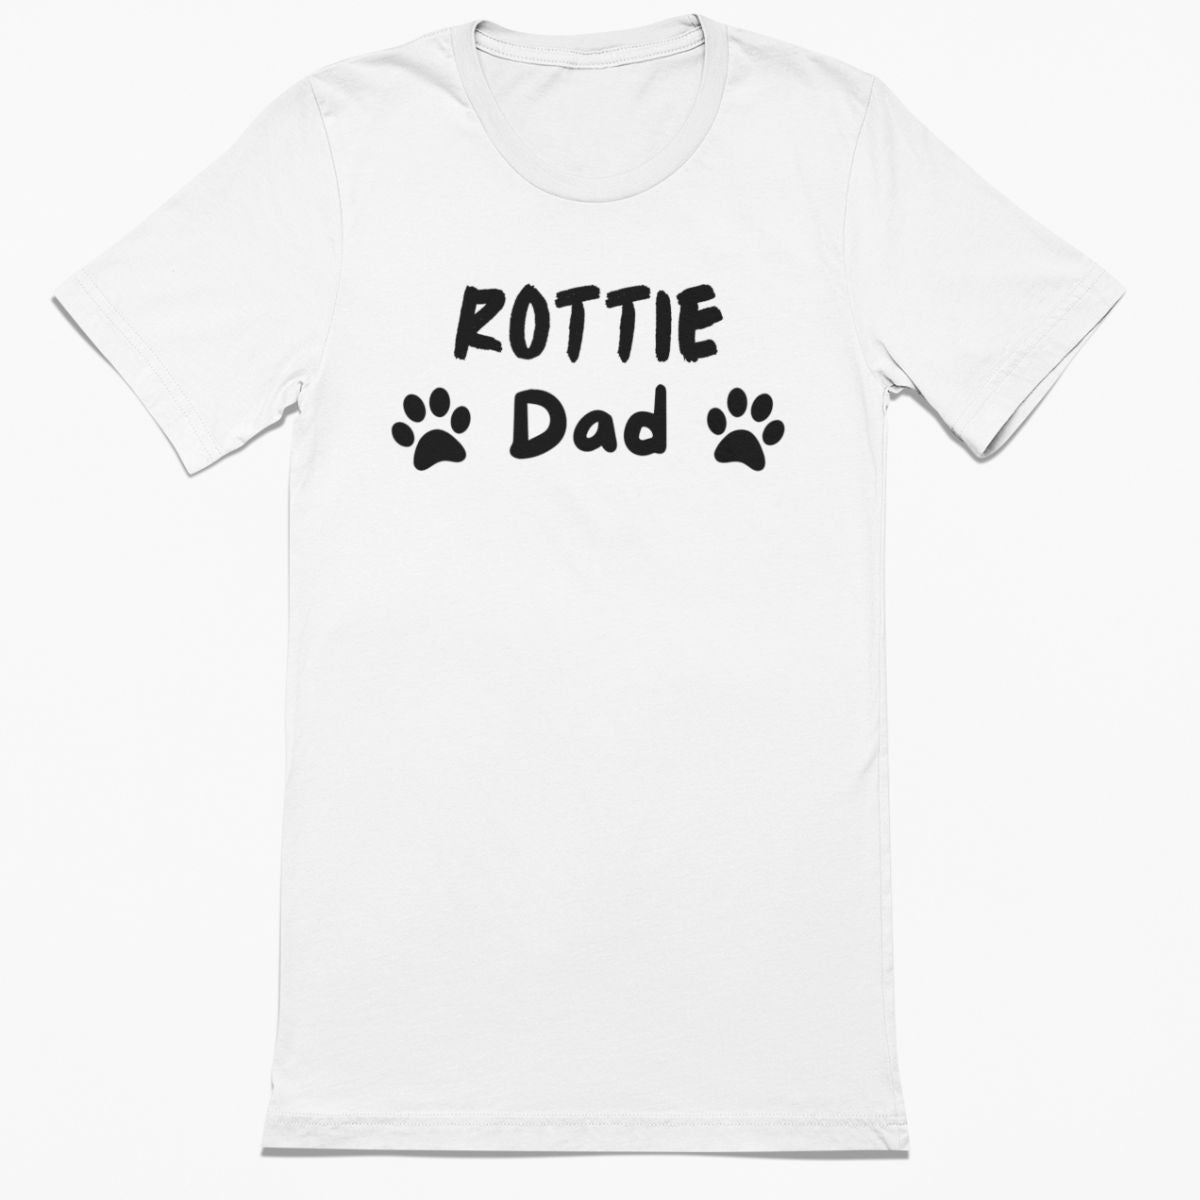 Rottie Dad Shirt